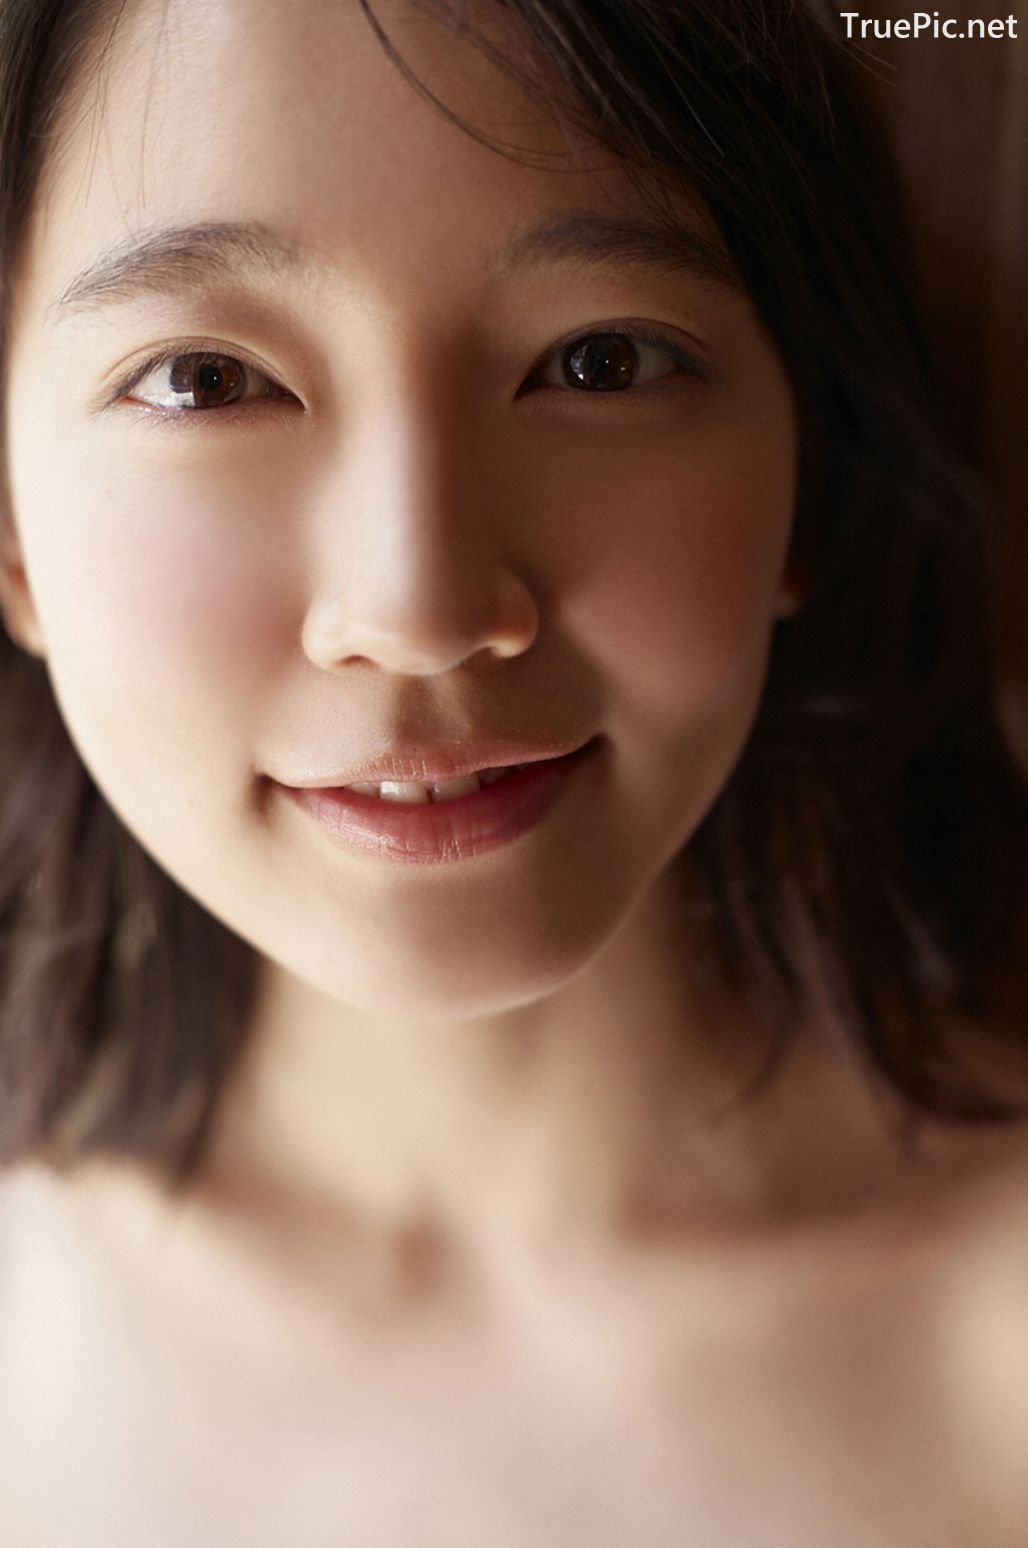 Image-Japanese-Actress-And-Model-Riho-Yoshioka-Pure-Beauty-Of-Sea-Goddess-TruePic.net- Picture-83